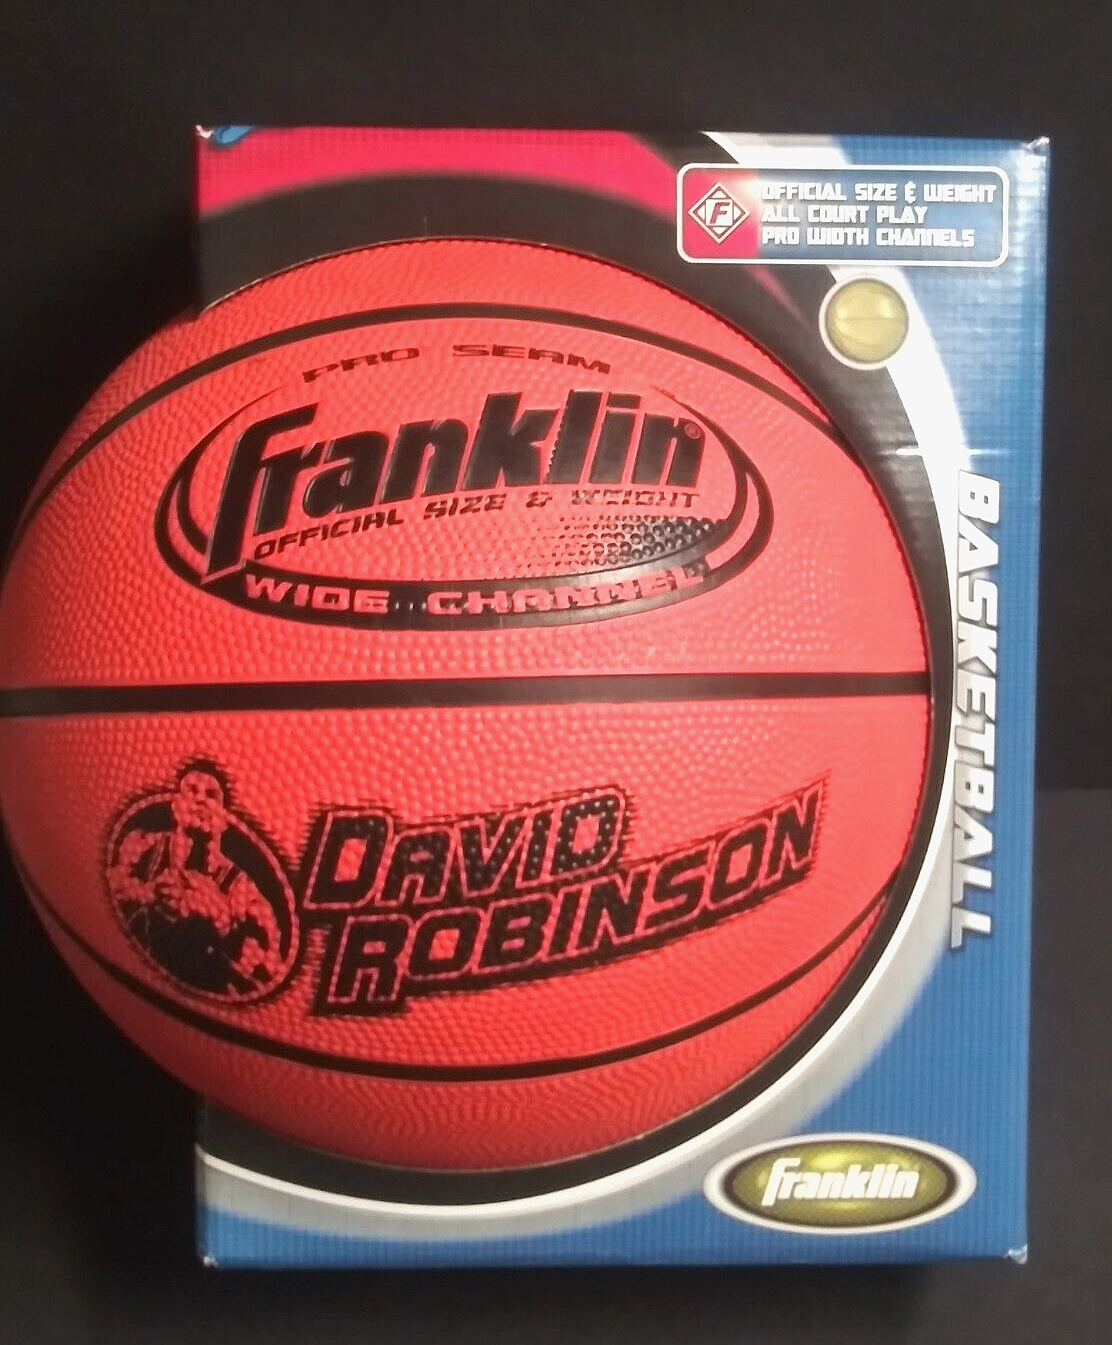 Franklin Sports All Court Rubber Basketball David Robinson c1990s (New in Box) - $39.99